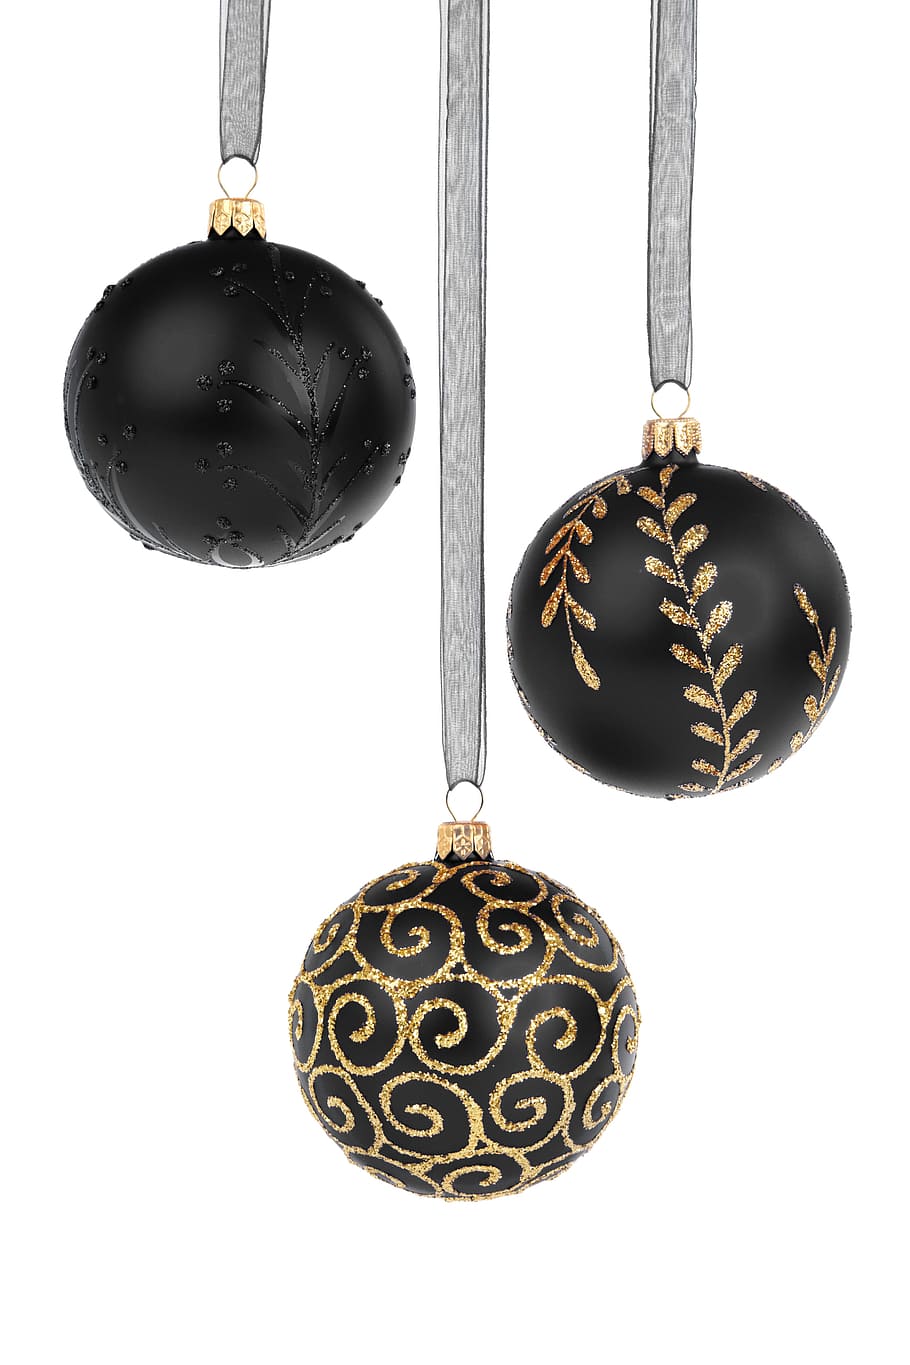 three black-and-gold baubles, Ball, Balls, Bauble, Celebration, christmas, december, decor, decoration, decorative